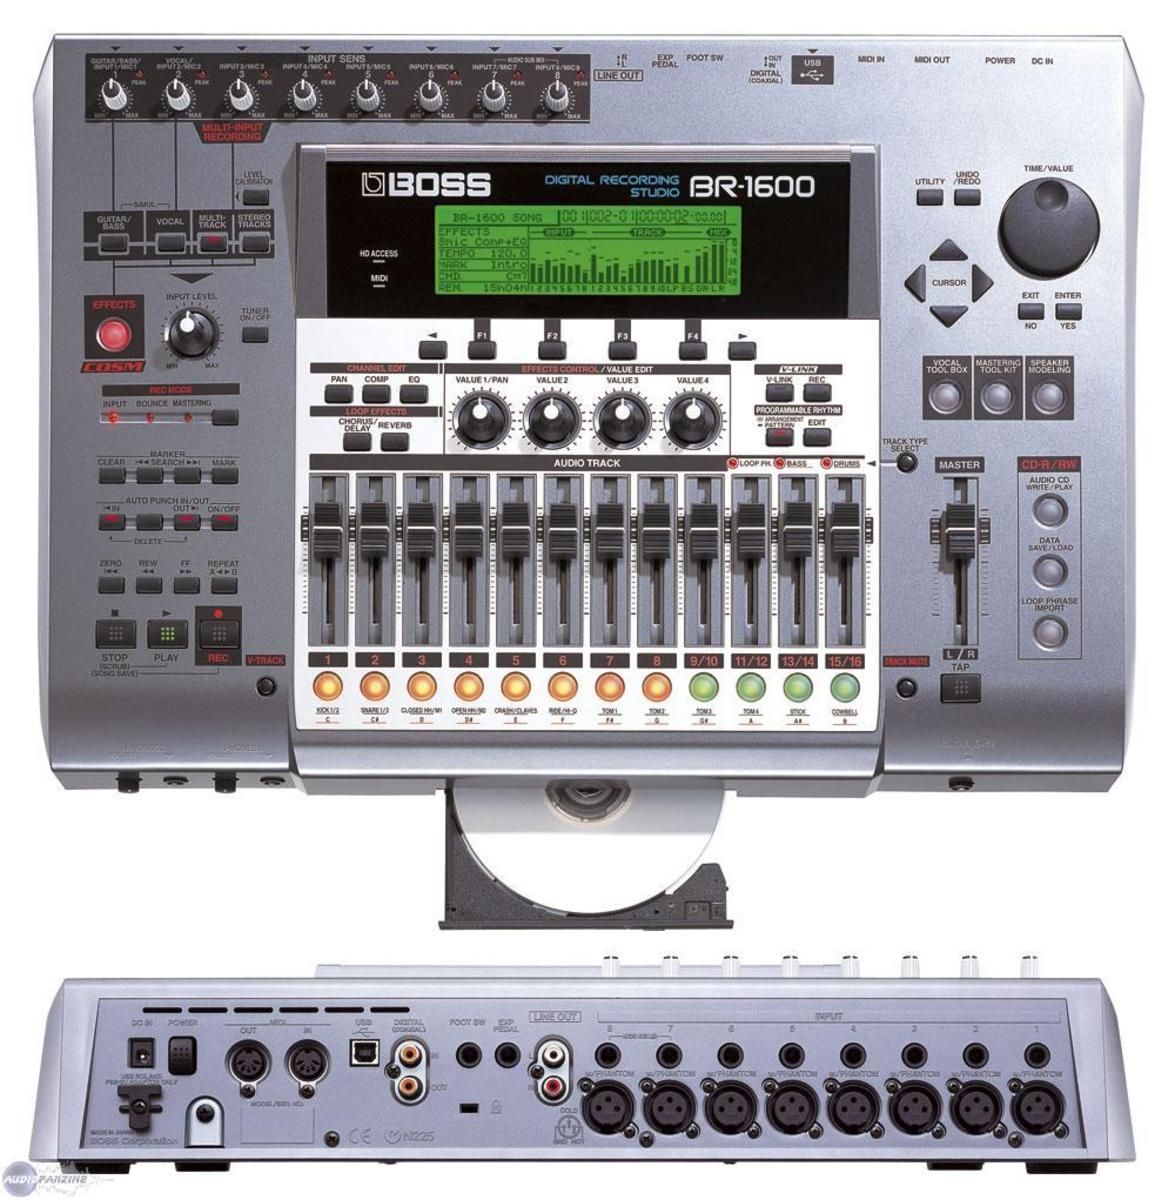 Roland MC-909 Sampling Groovebox image (#41014) - Audiofanzine